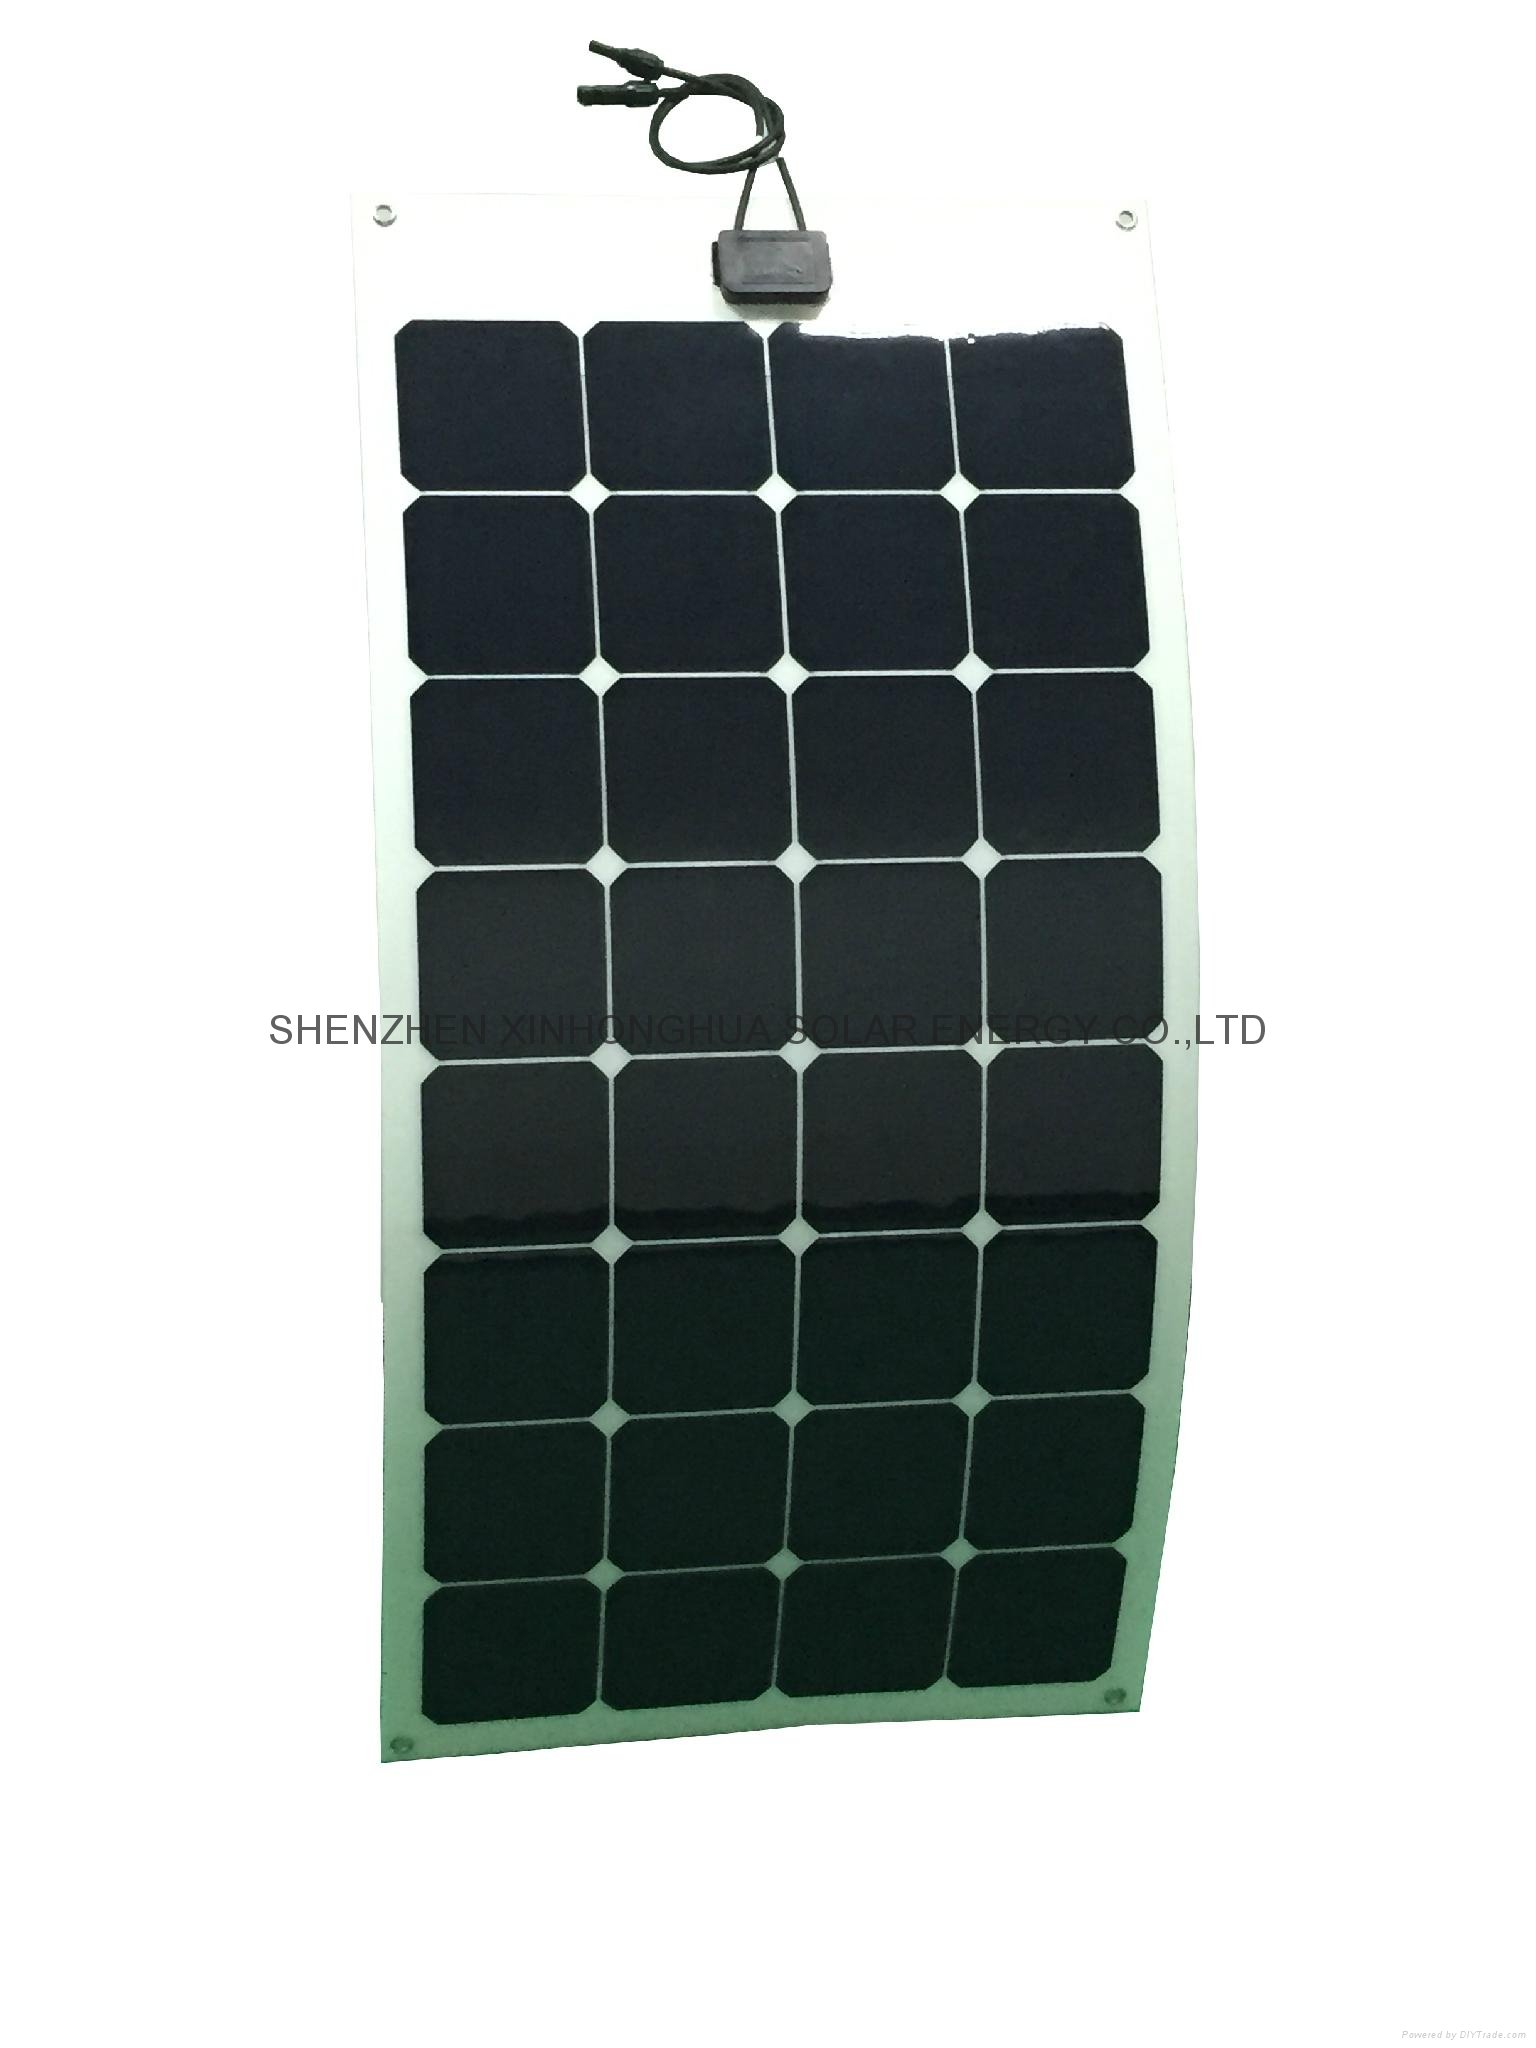 sunpower cell semiflexible solar panel for RV, boats 100W  2